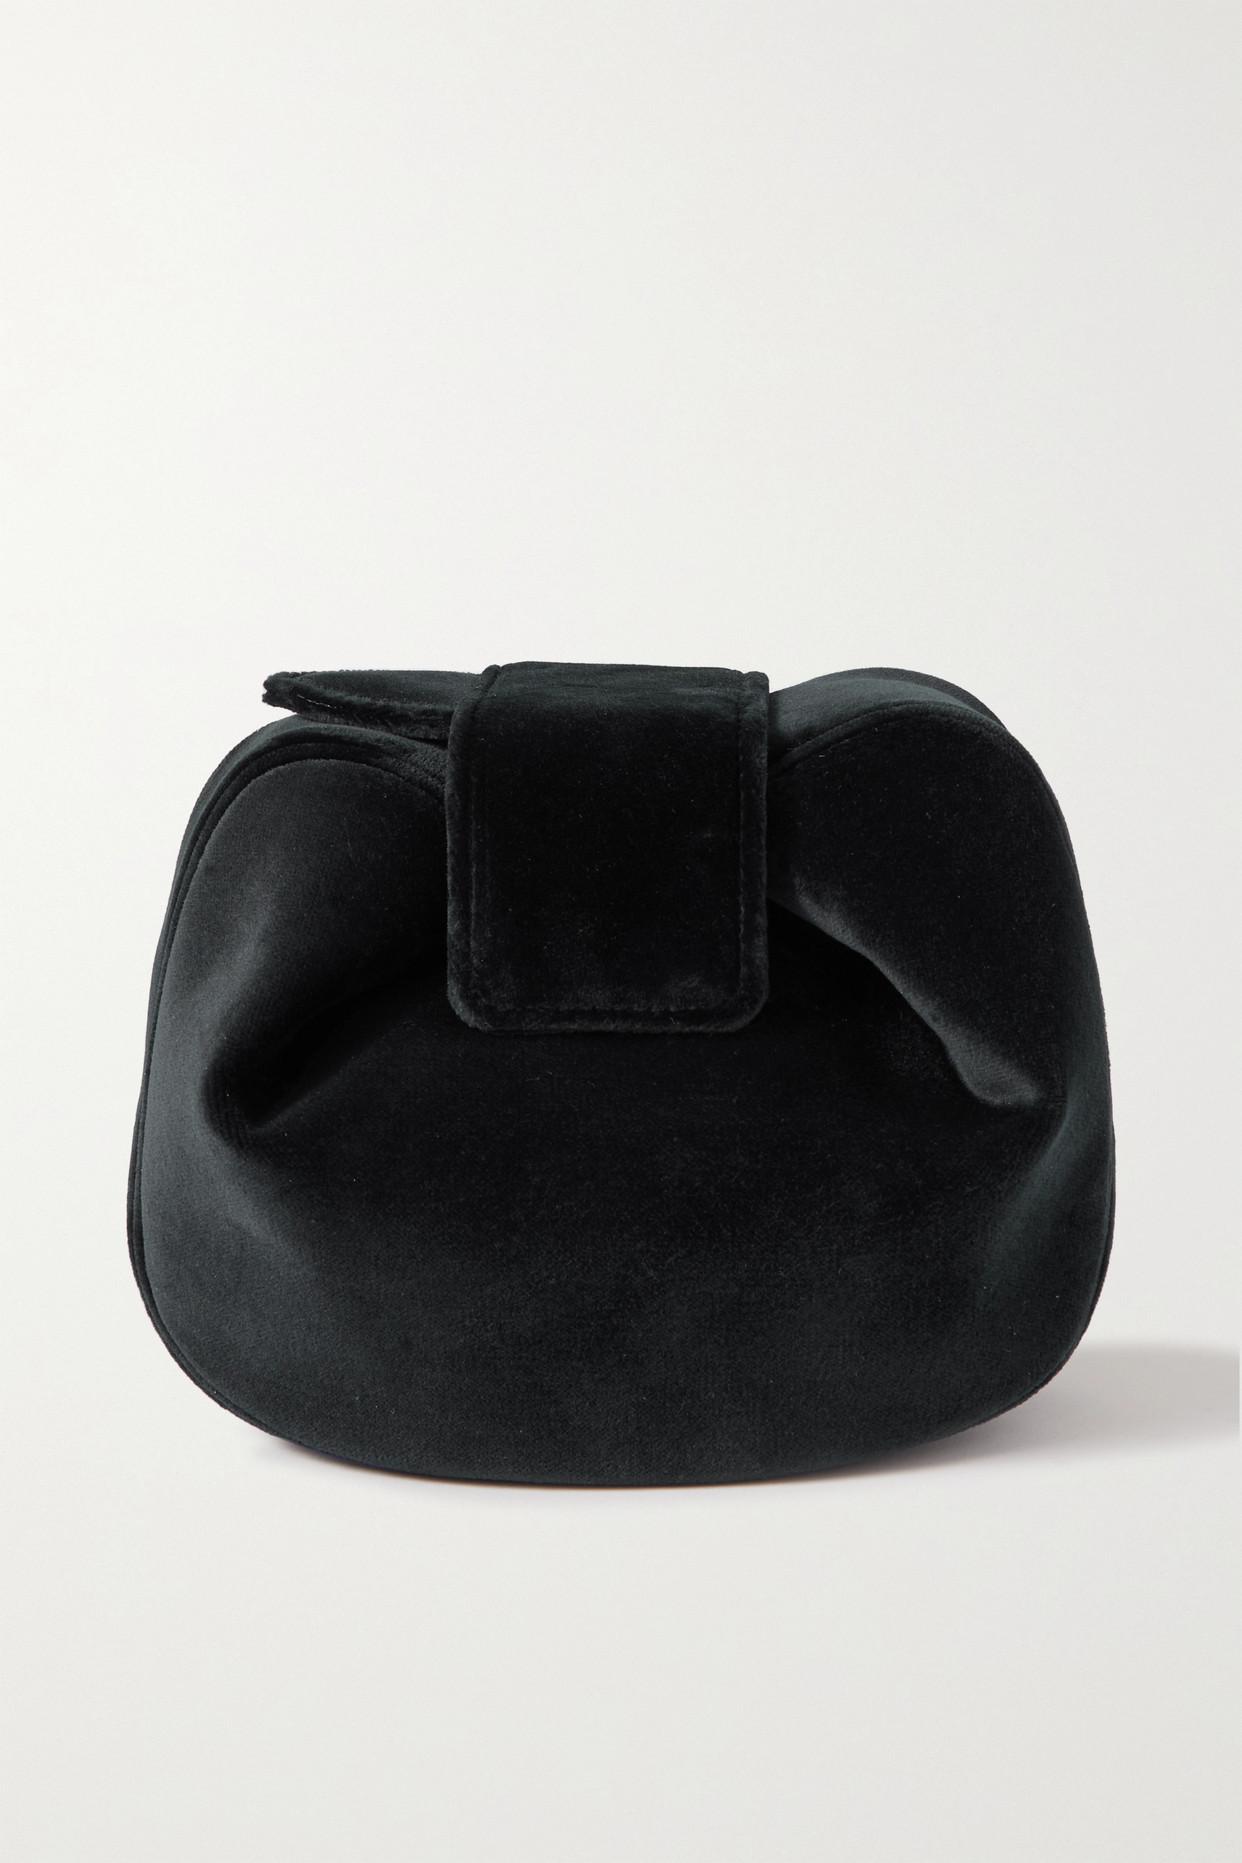 Gabriela Hearst Demi Leather Top-Handle Bag - Bergdorf Goodman